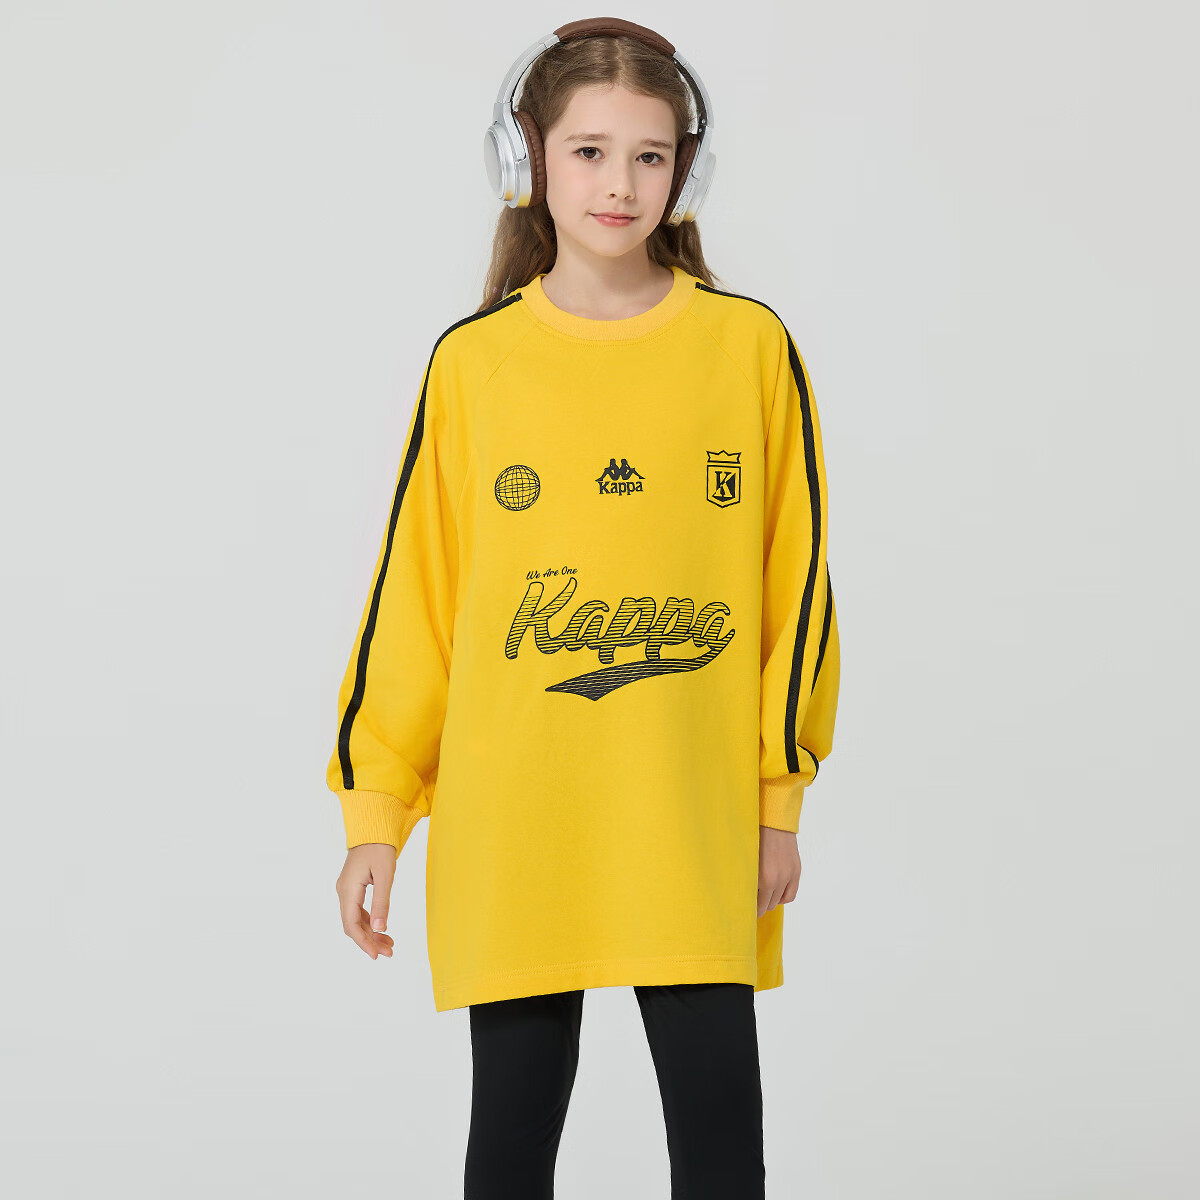 Kappa Kids卡帕童装中大童春季卫衣裙女款时尚舒适百搭长袖上衣 姜黄色 170